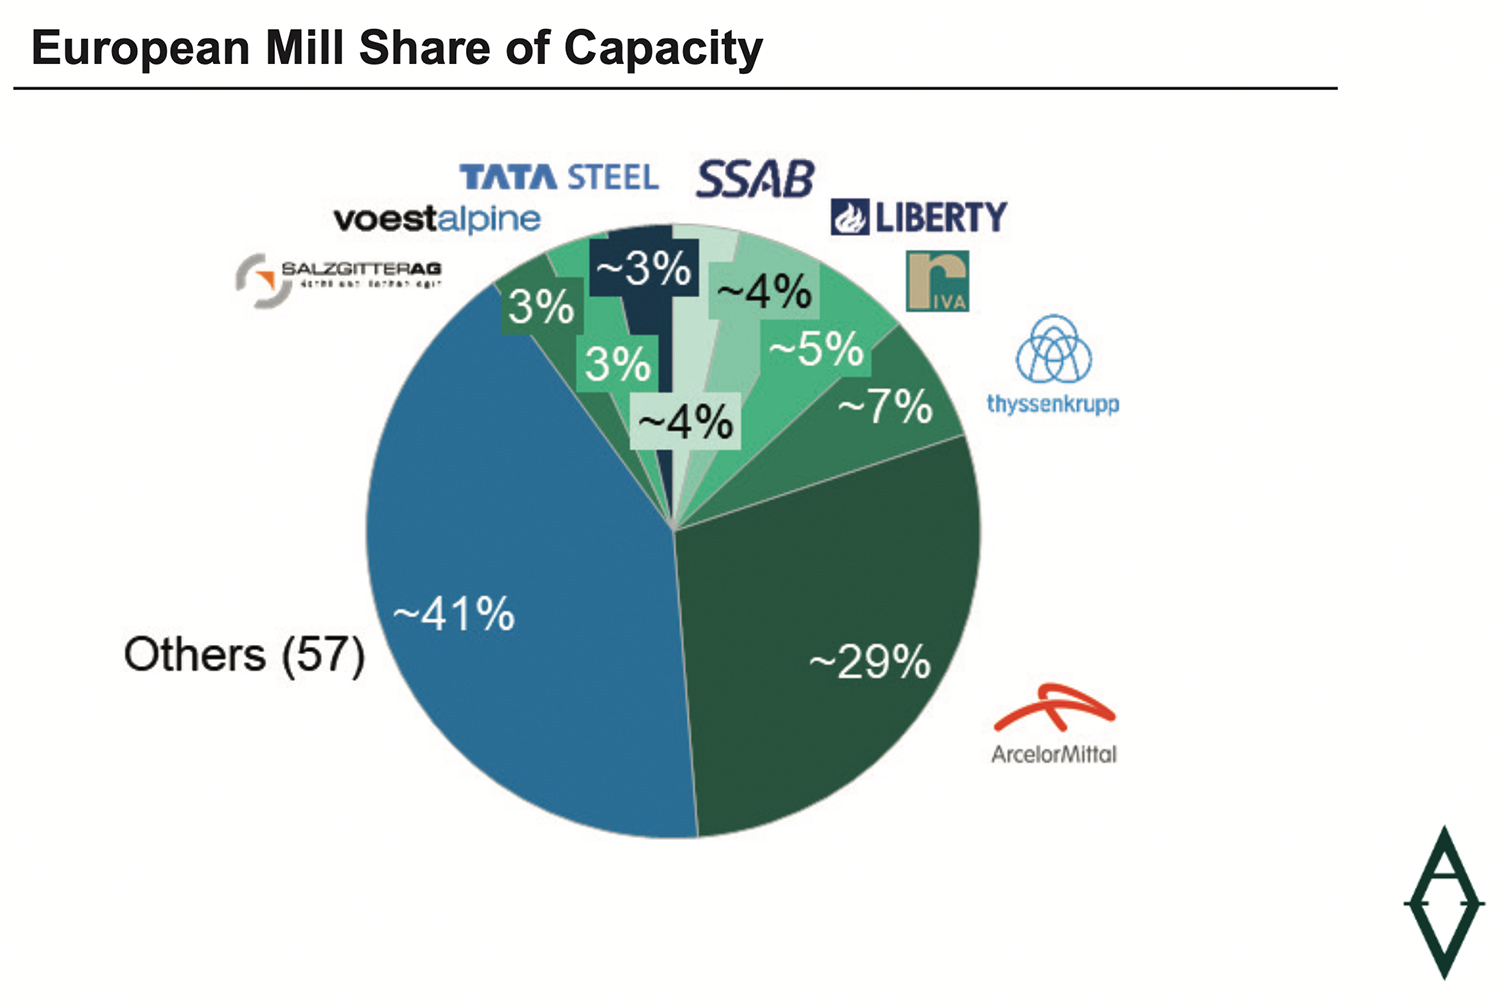 European Mill Share of Capacity pie chart